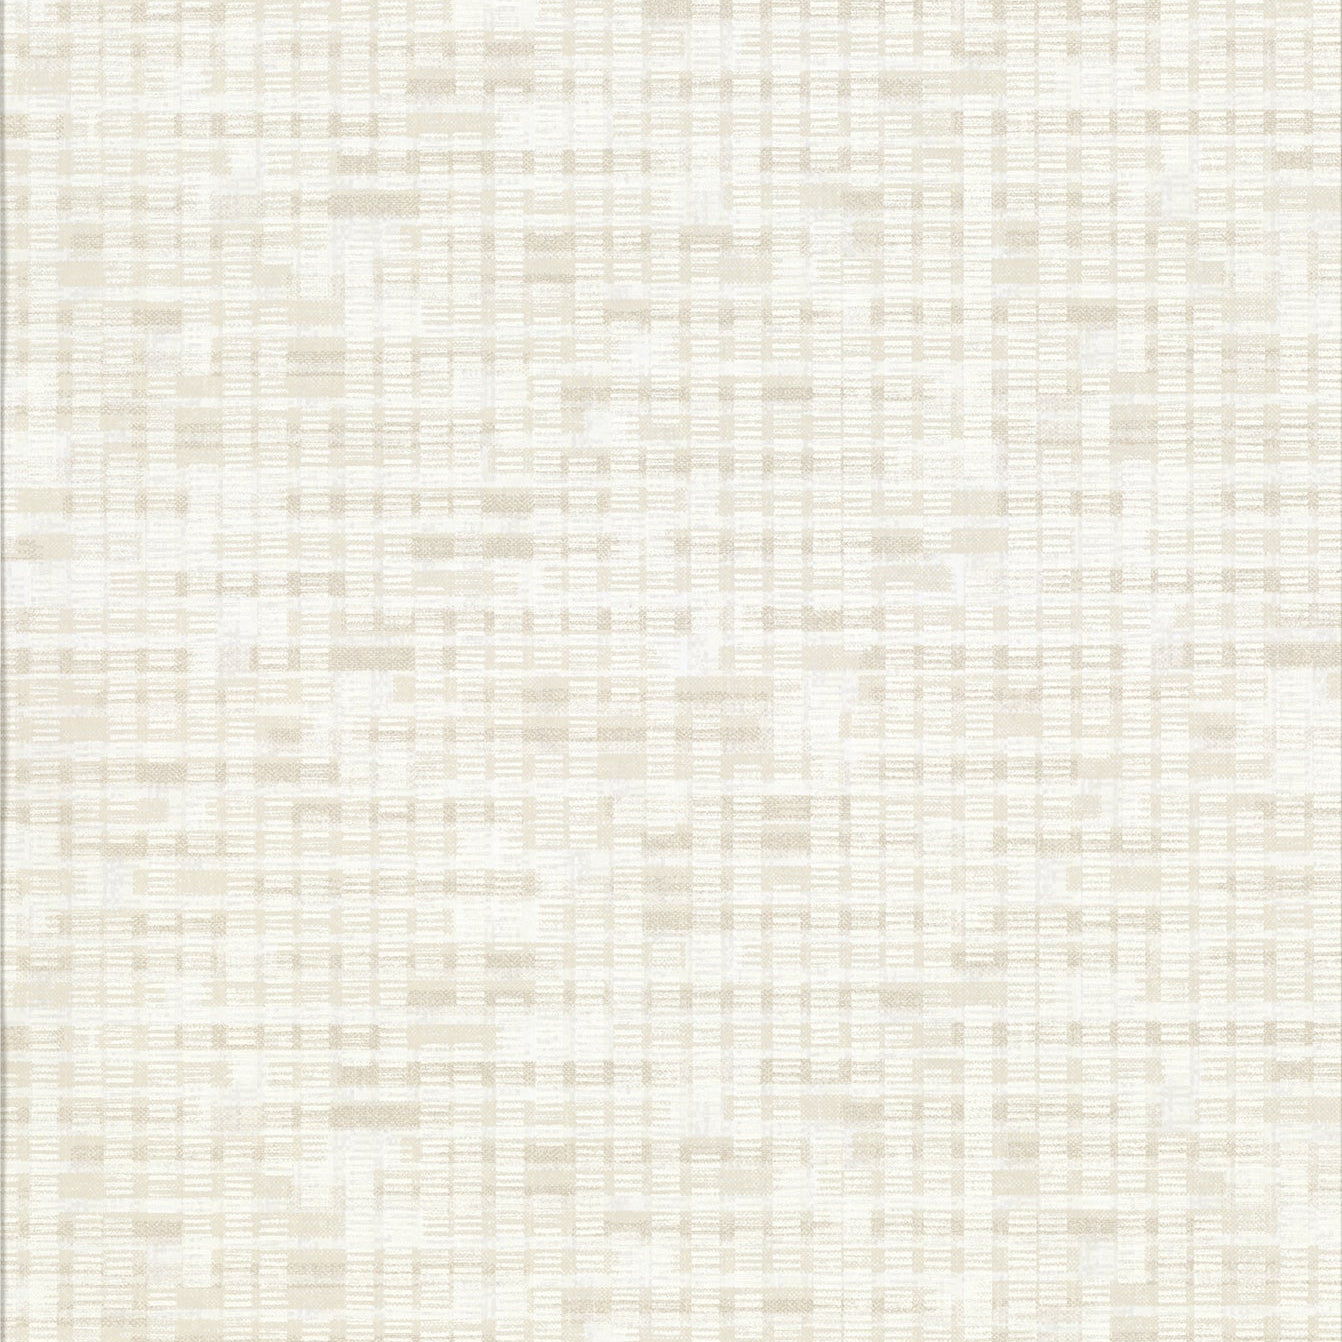 Save 2909-IH-23601 Riva Clarice Cream Distressed Faux Linen Brewster Wallpaper